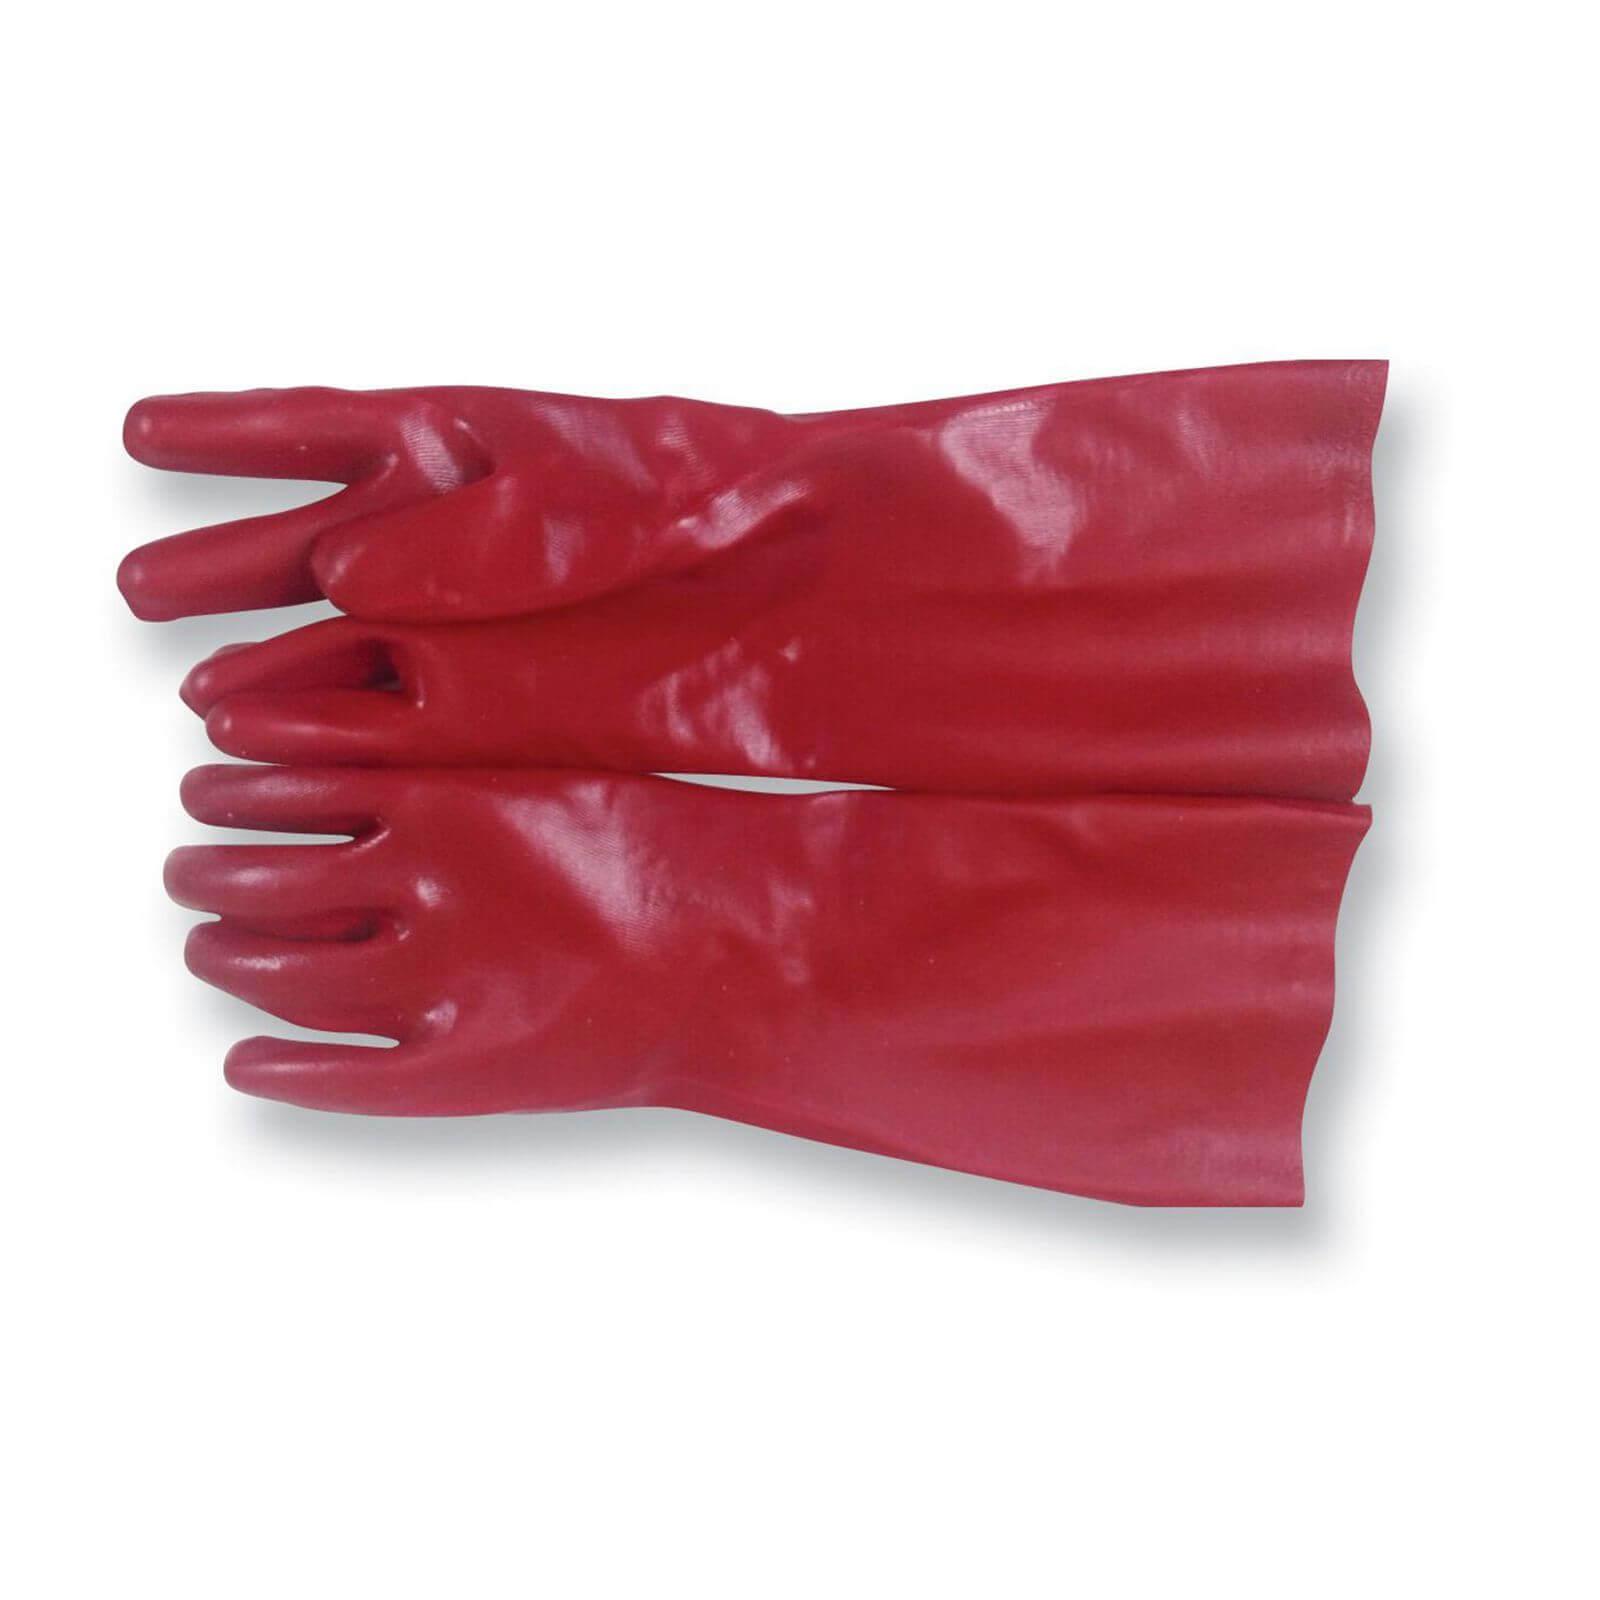 PVC Gauntlet Gloves